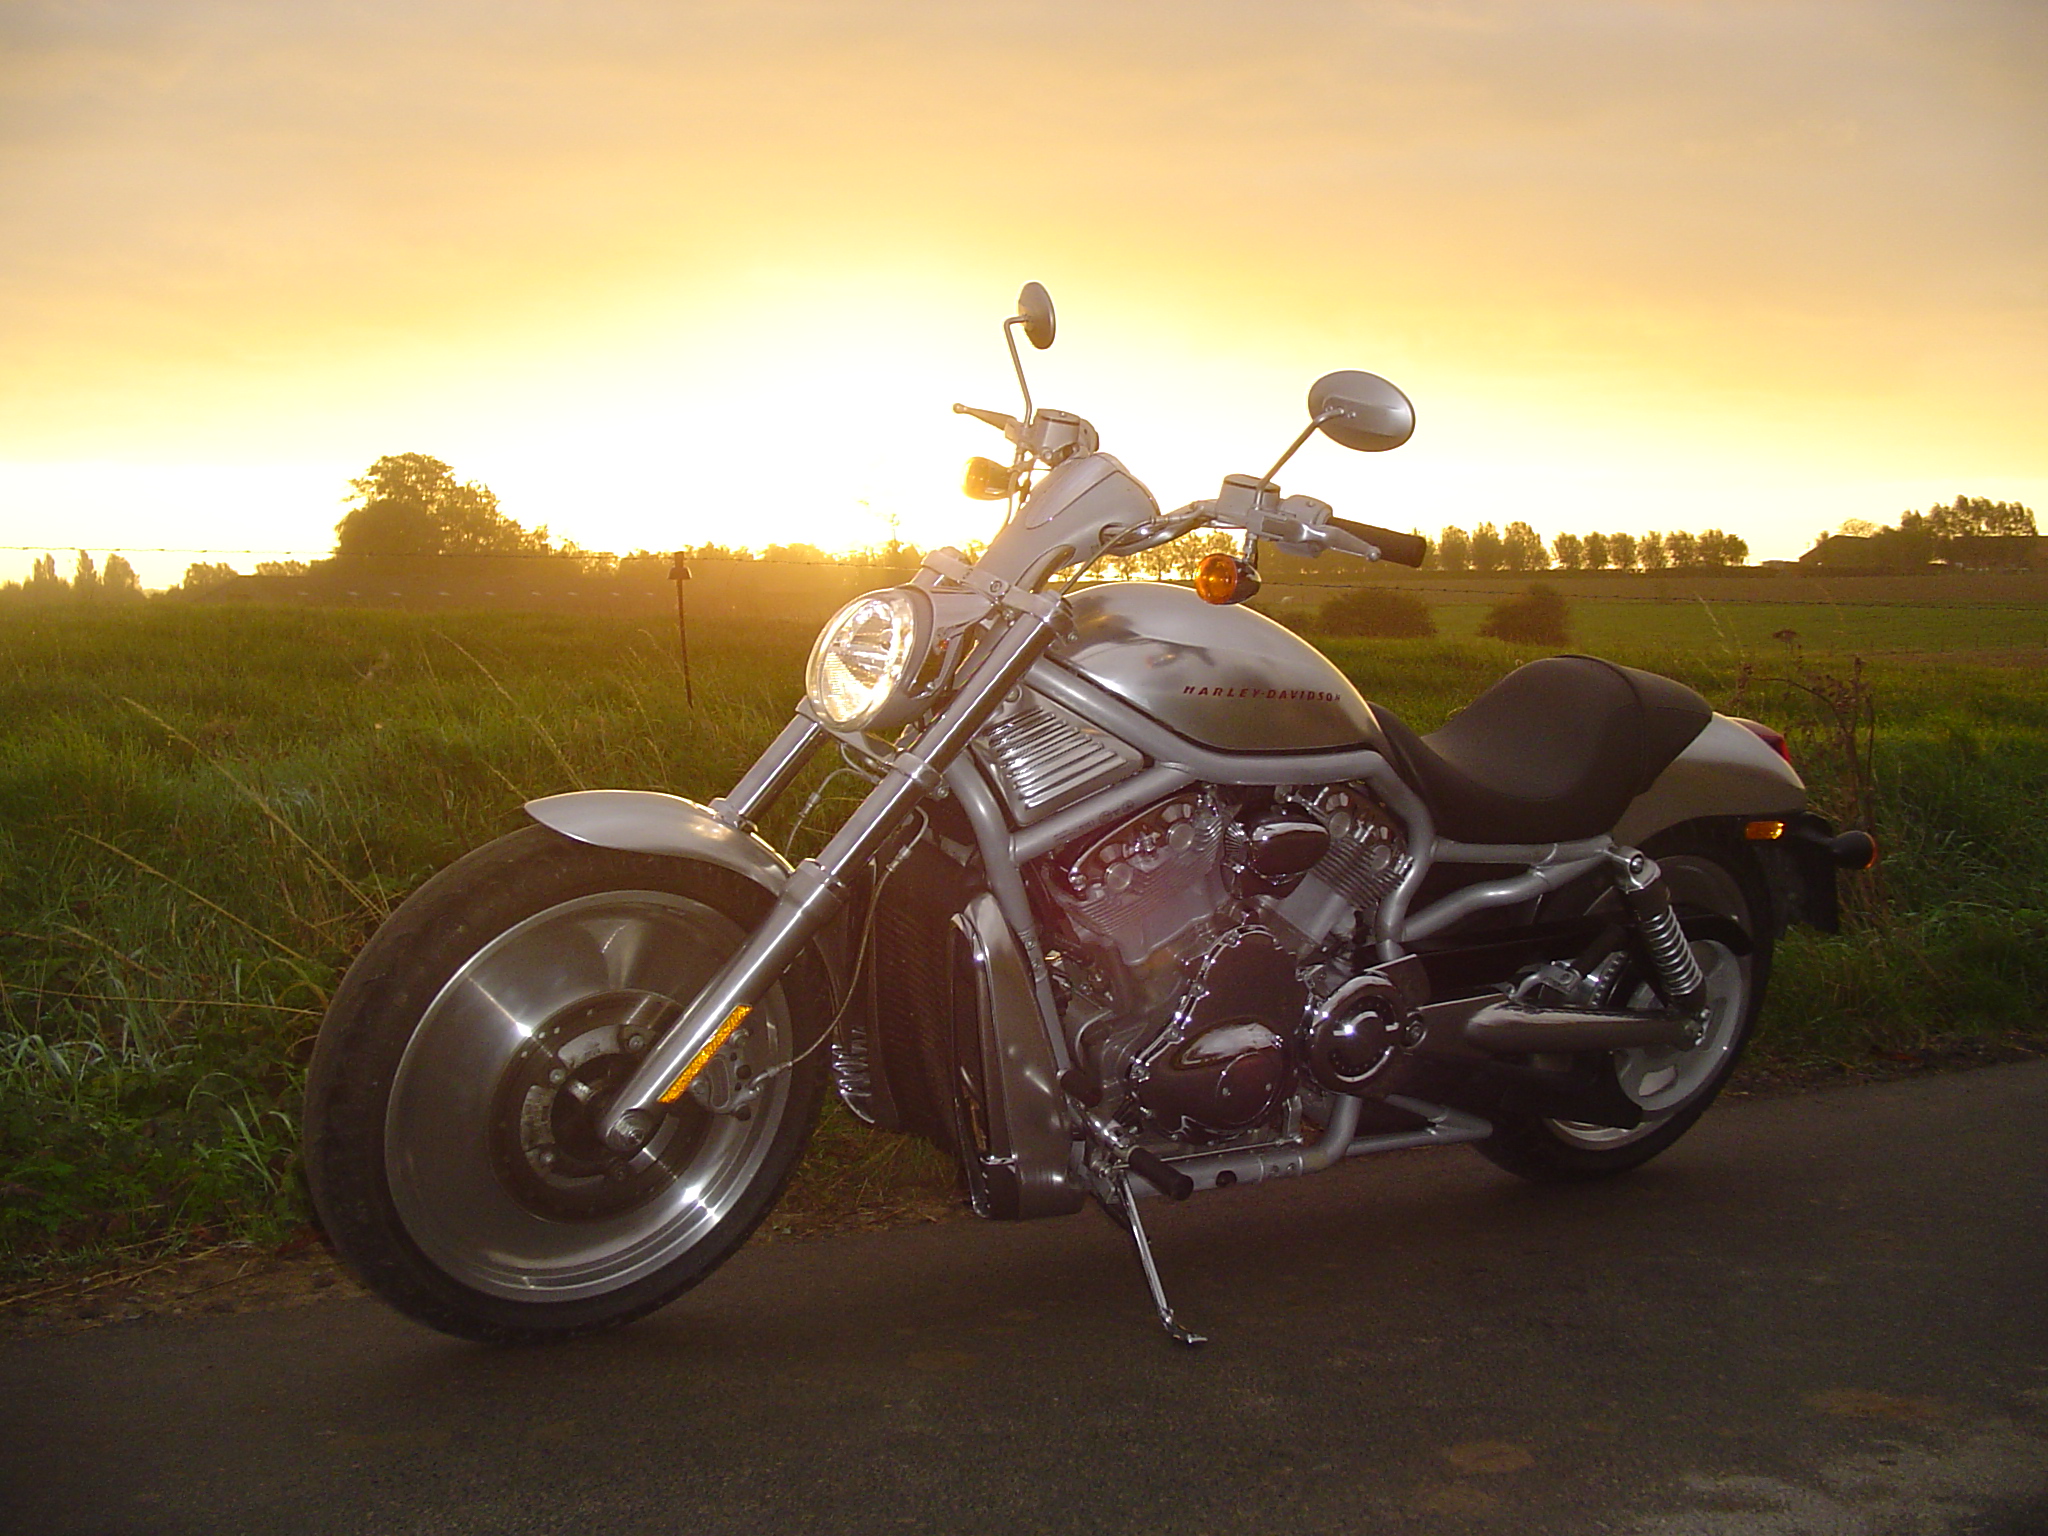 Foto van Harley Davidson V-Rod bij zonsopgang (digitale foto met tegenblits)